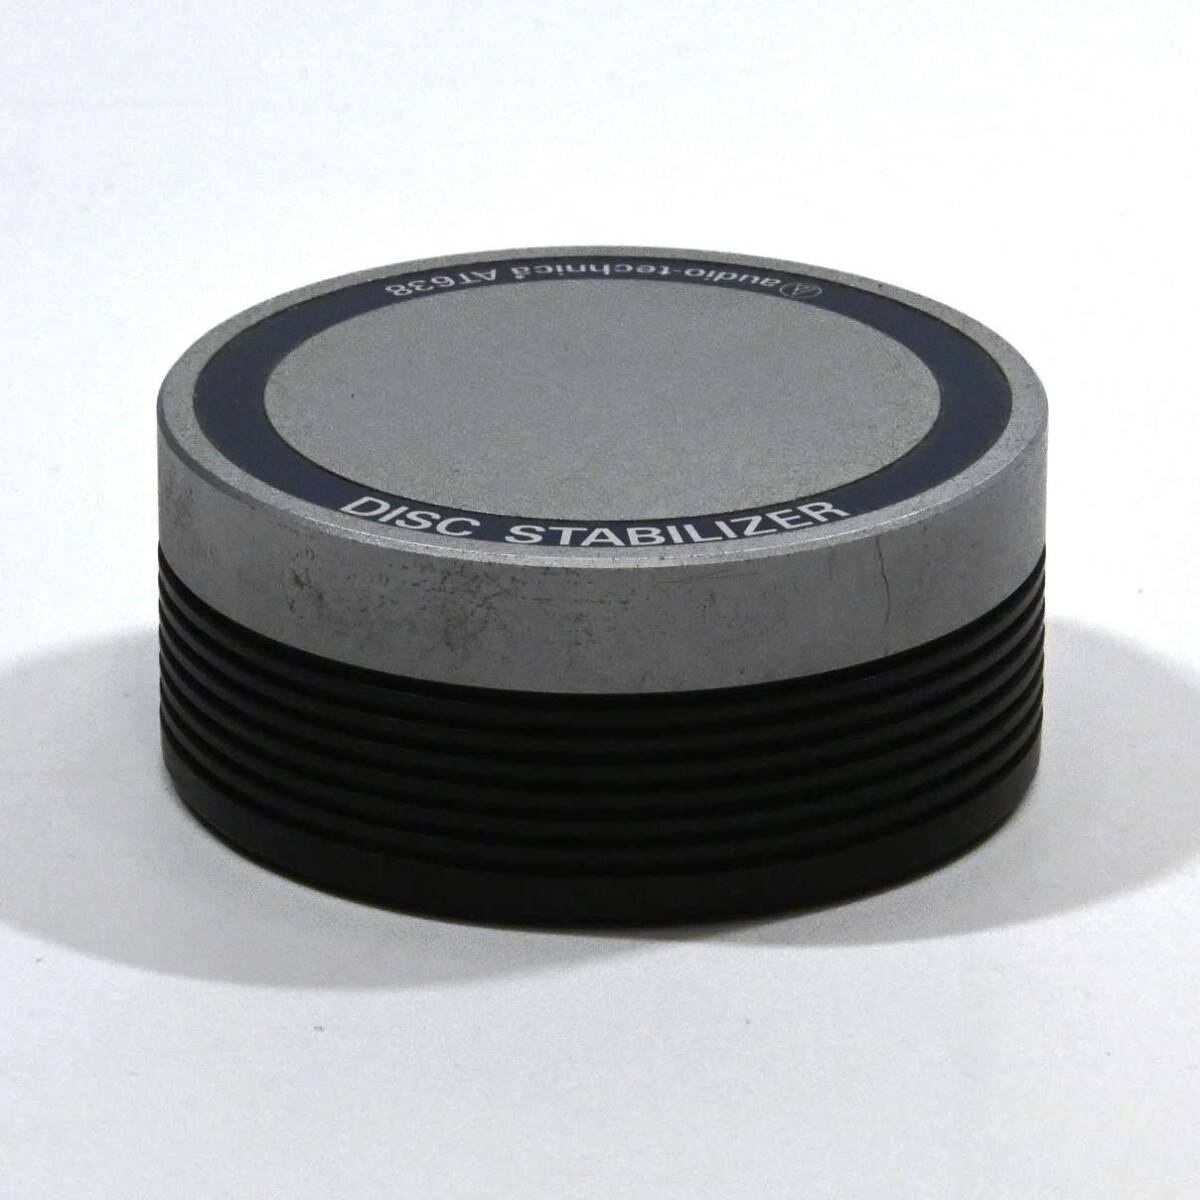 audio-technica DISK STABILIZER AT638 Audio Technica disk stabilizer 